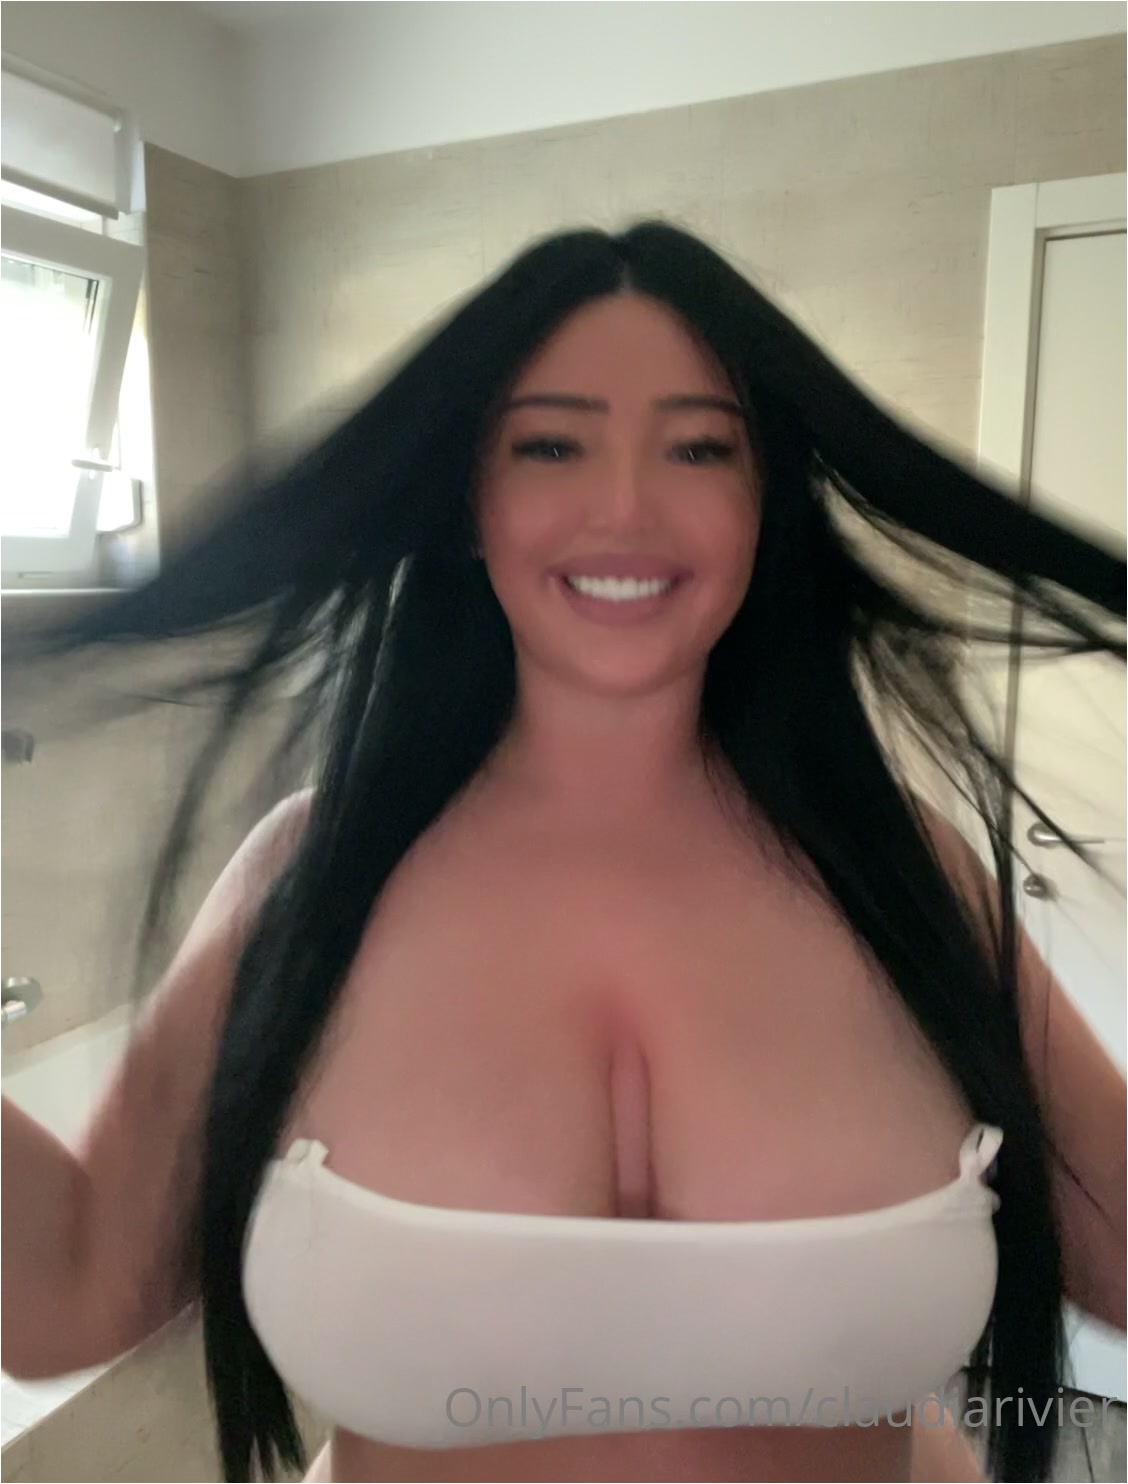 Claudia Rivier - Onlyfans Huge Tits Latina Video 20 [UltraHD/2K 1484P]